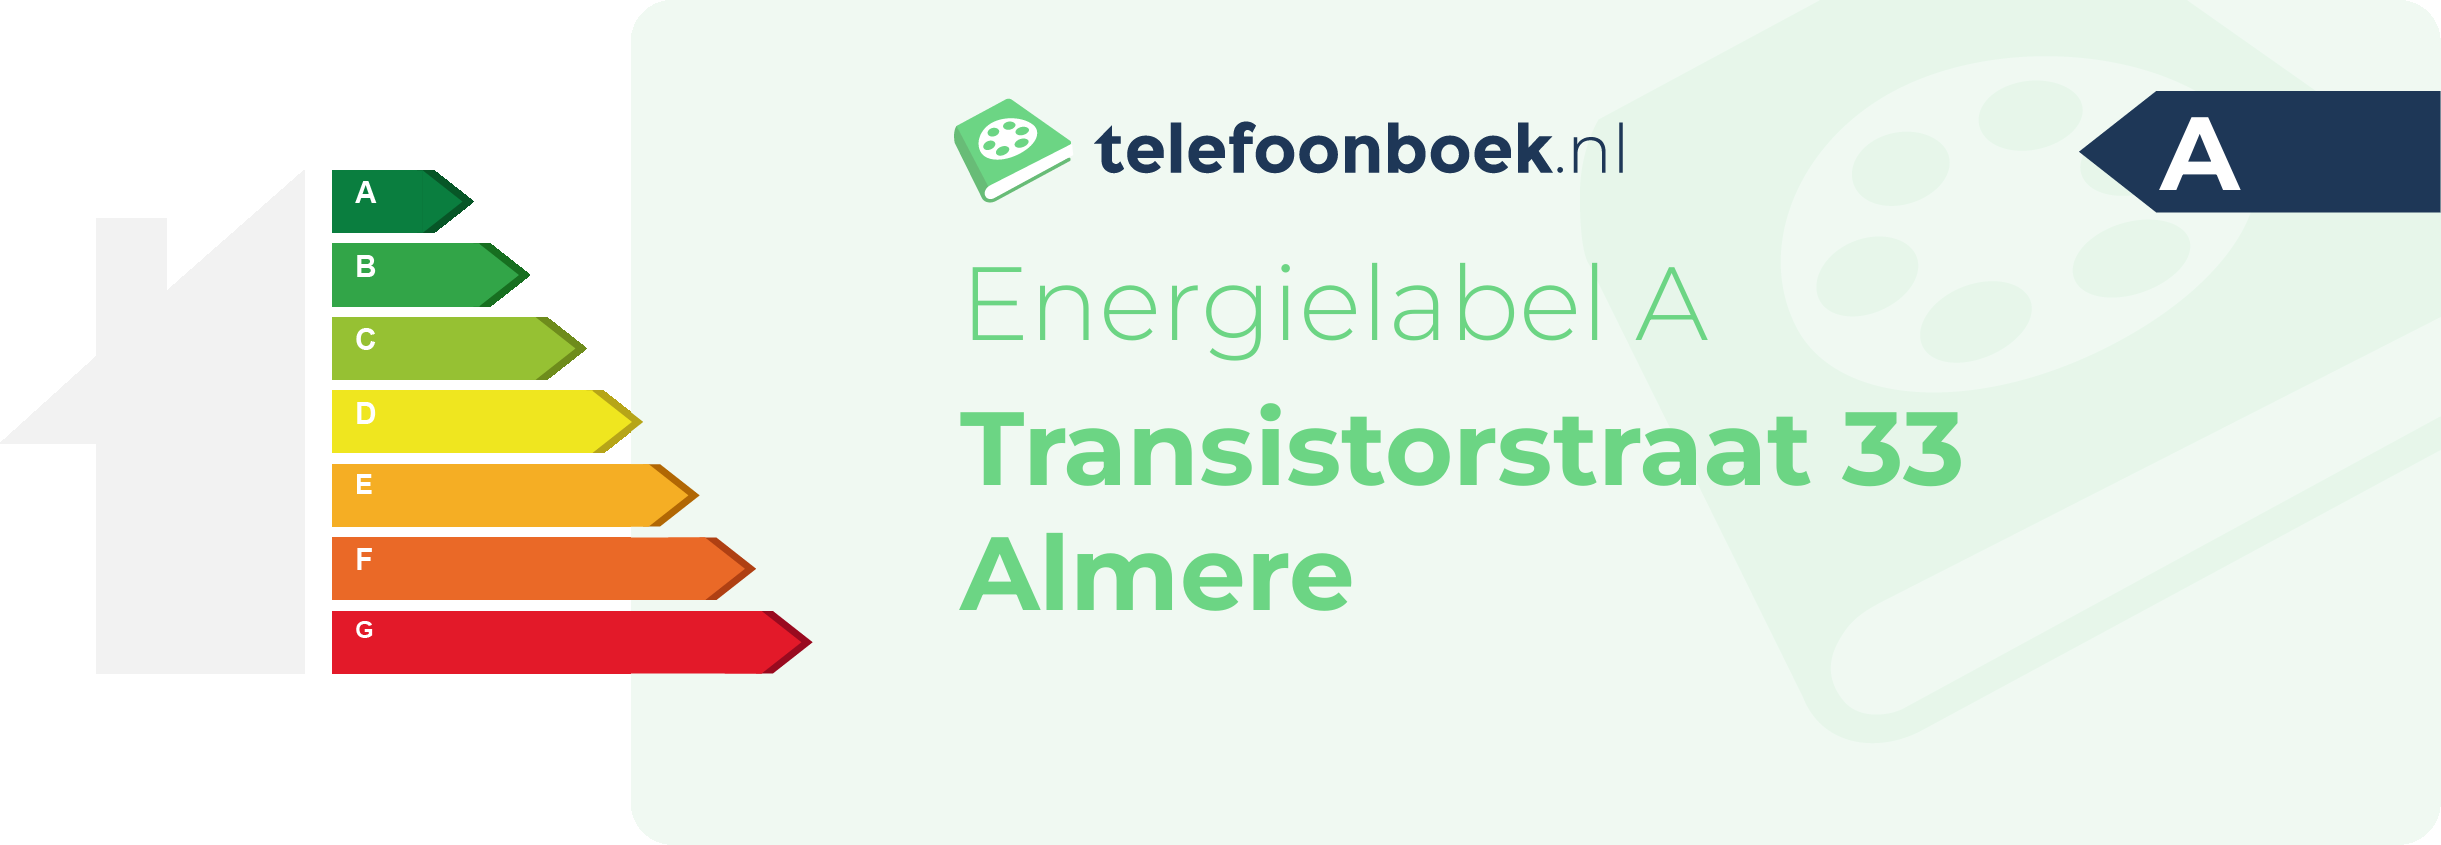 Energielabel Transistorstraat 33 Almere